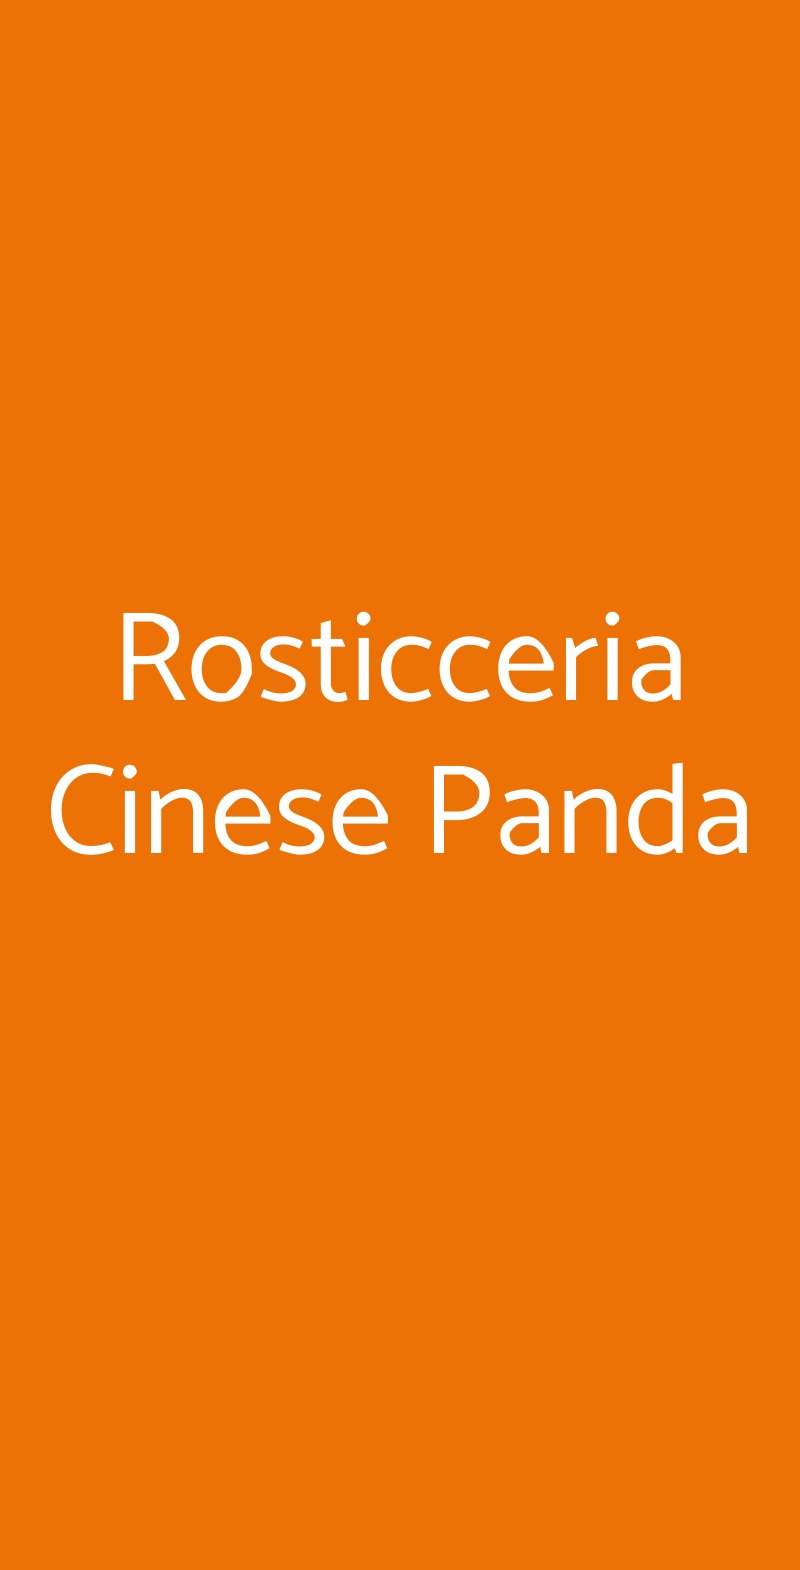 Rosticceria Cinese Panda Savona menù 1 pagina